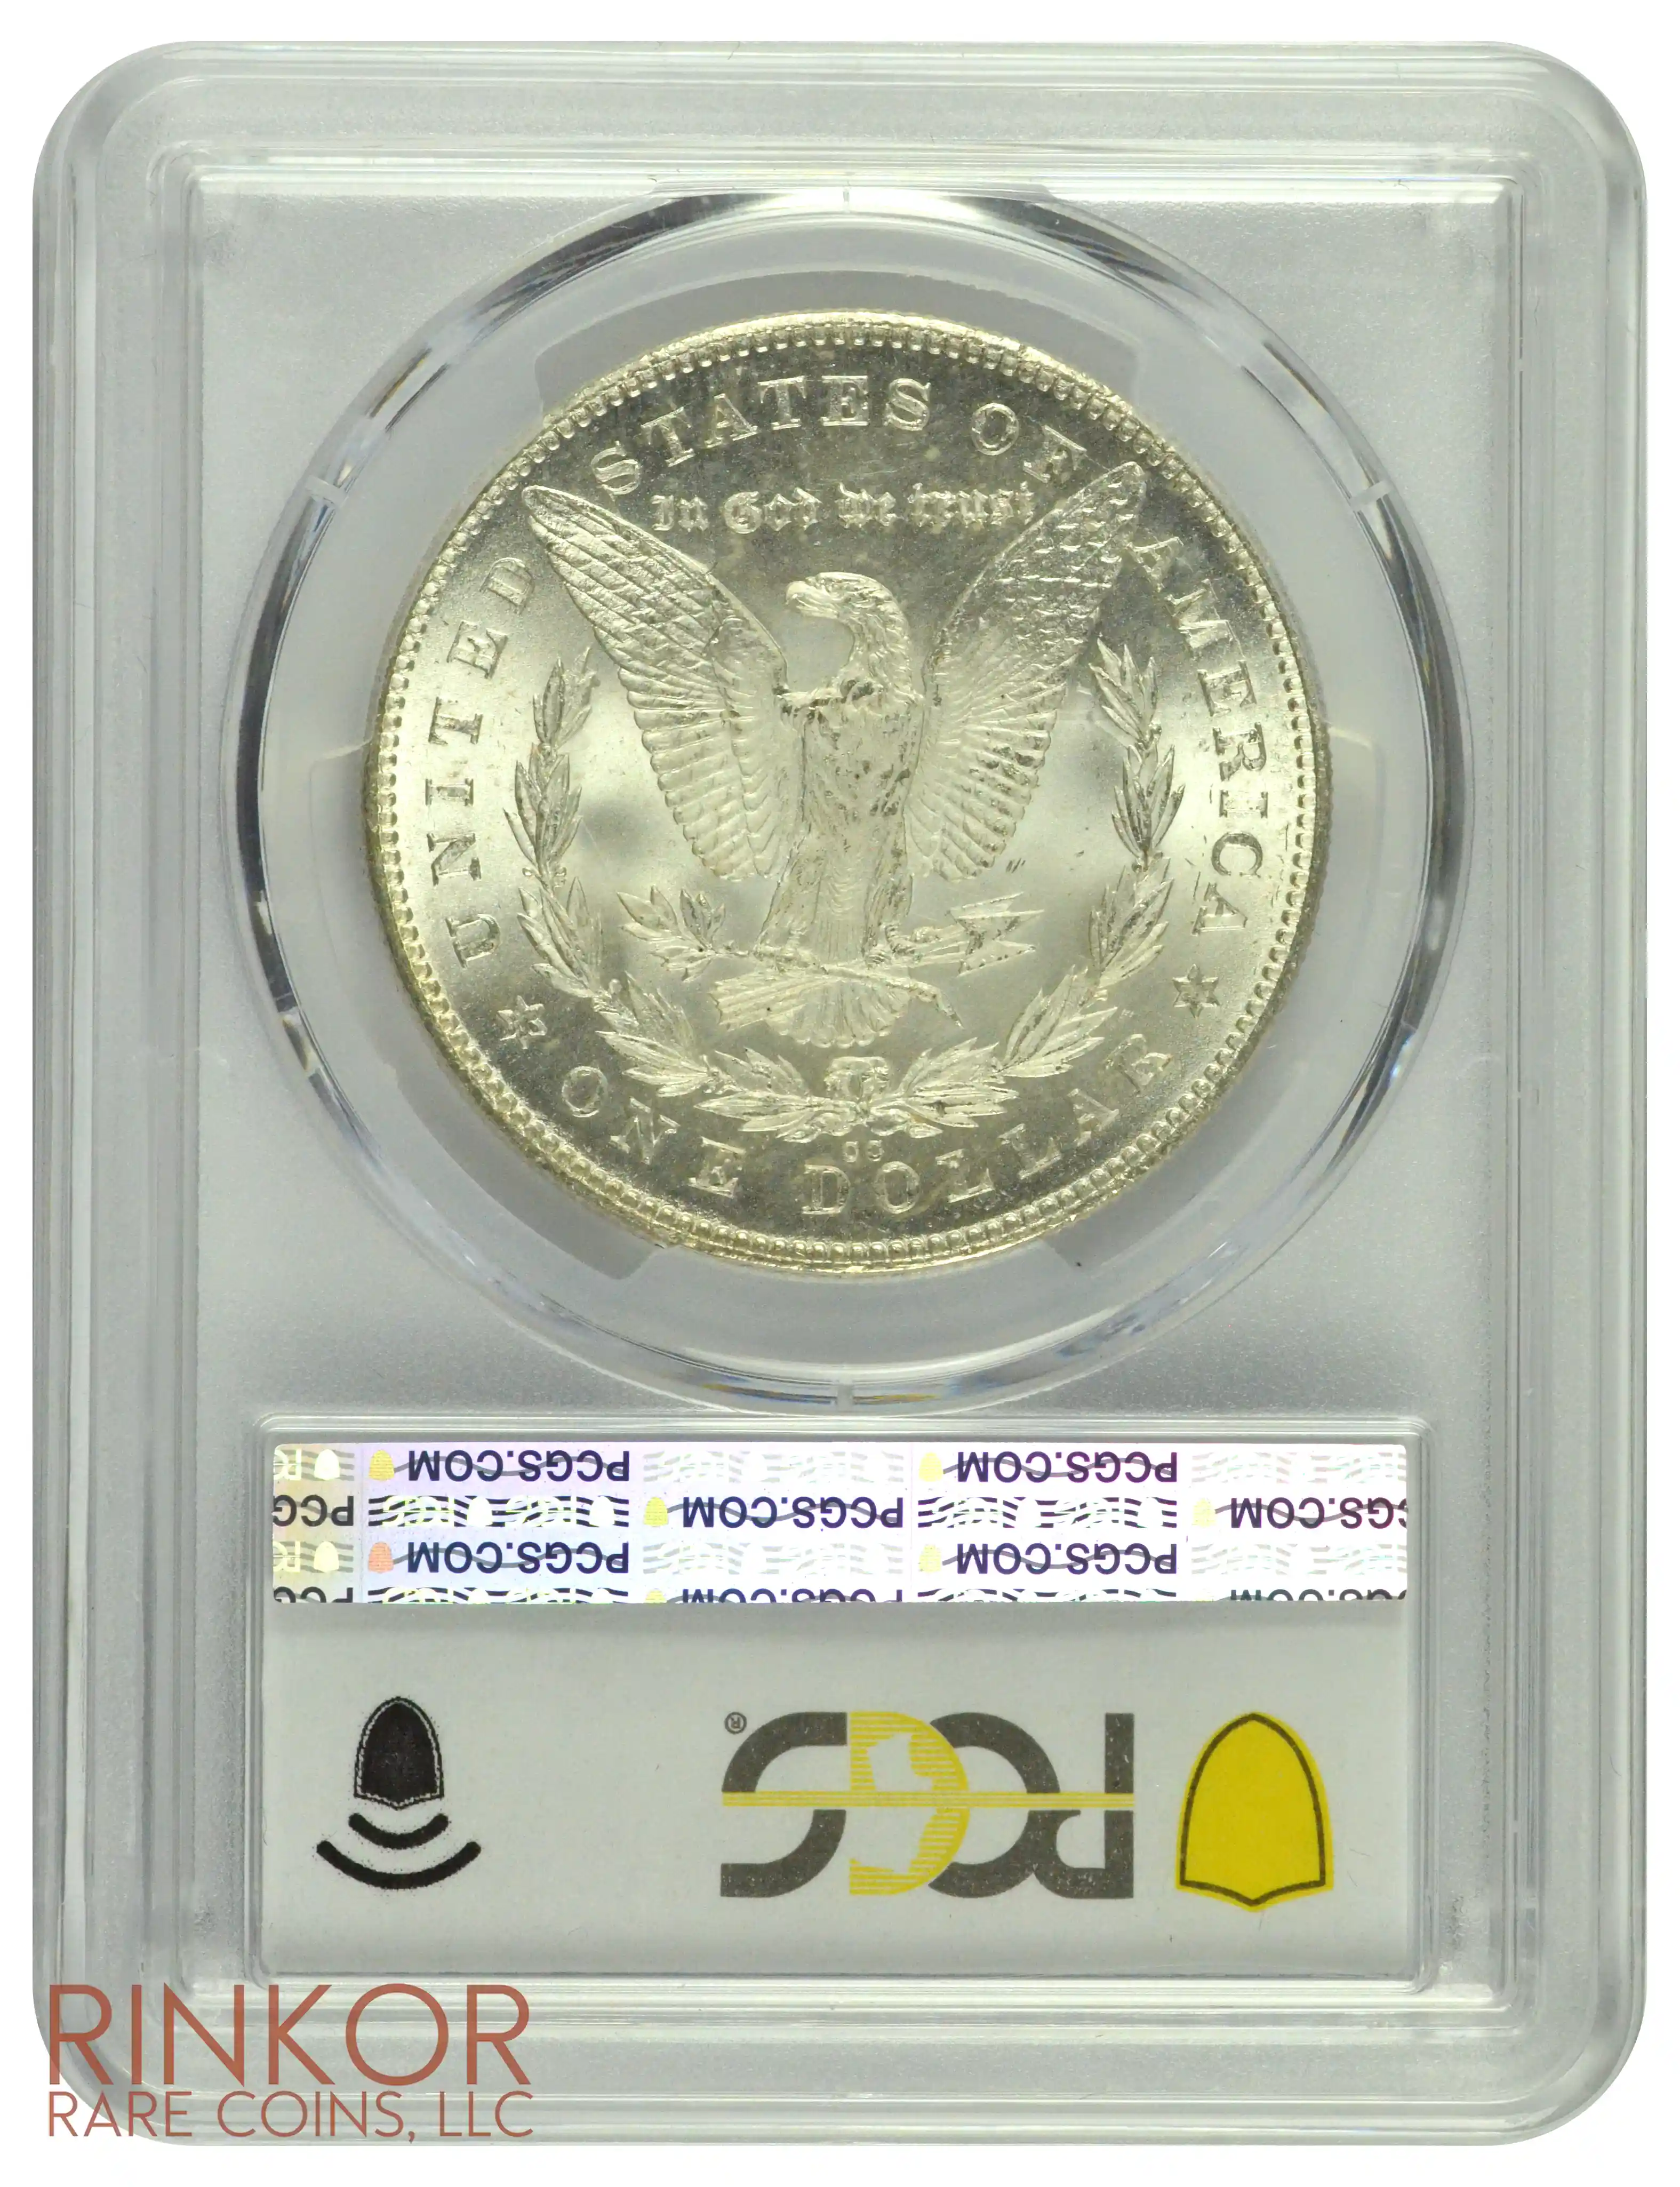 1880-CC $1 VAM 7 8/7 Reverse of 1878 PCGS MS 66